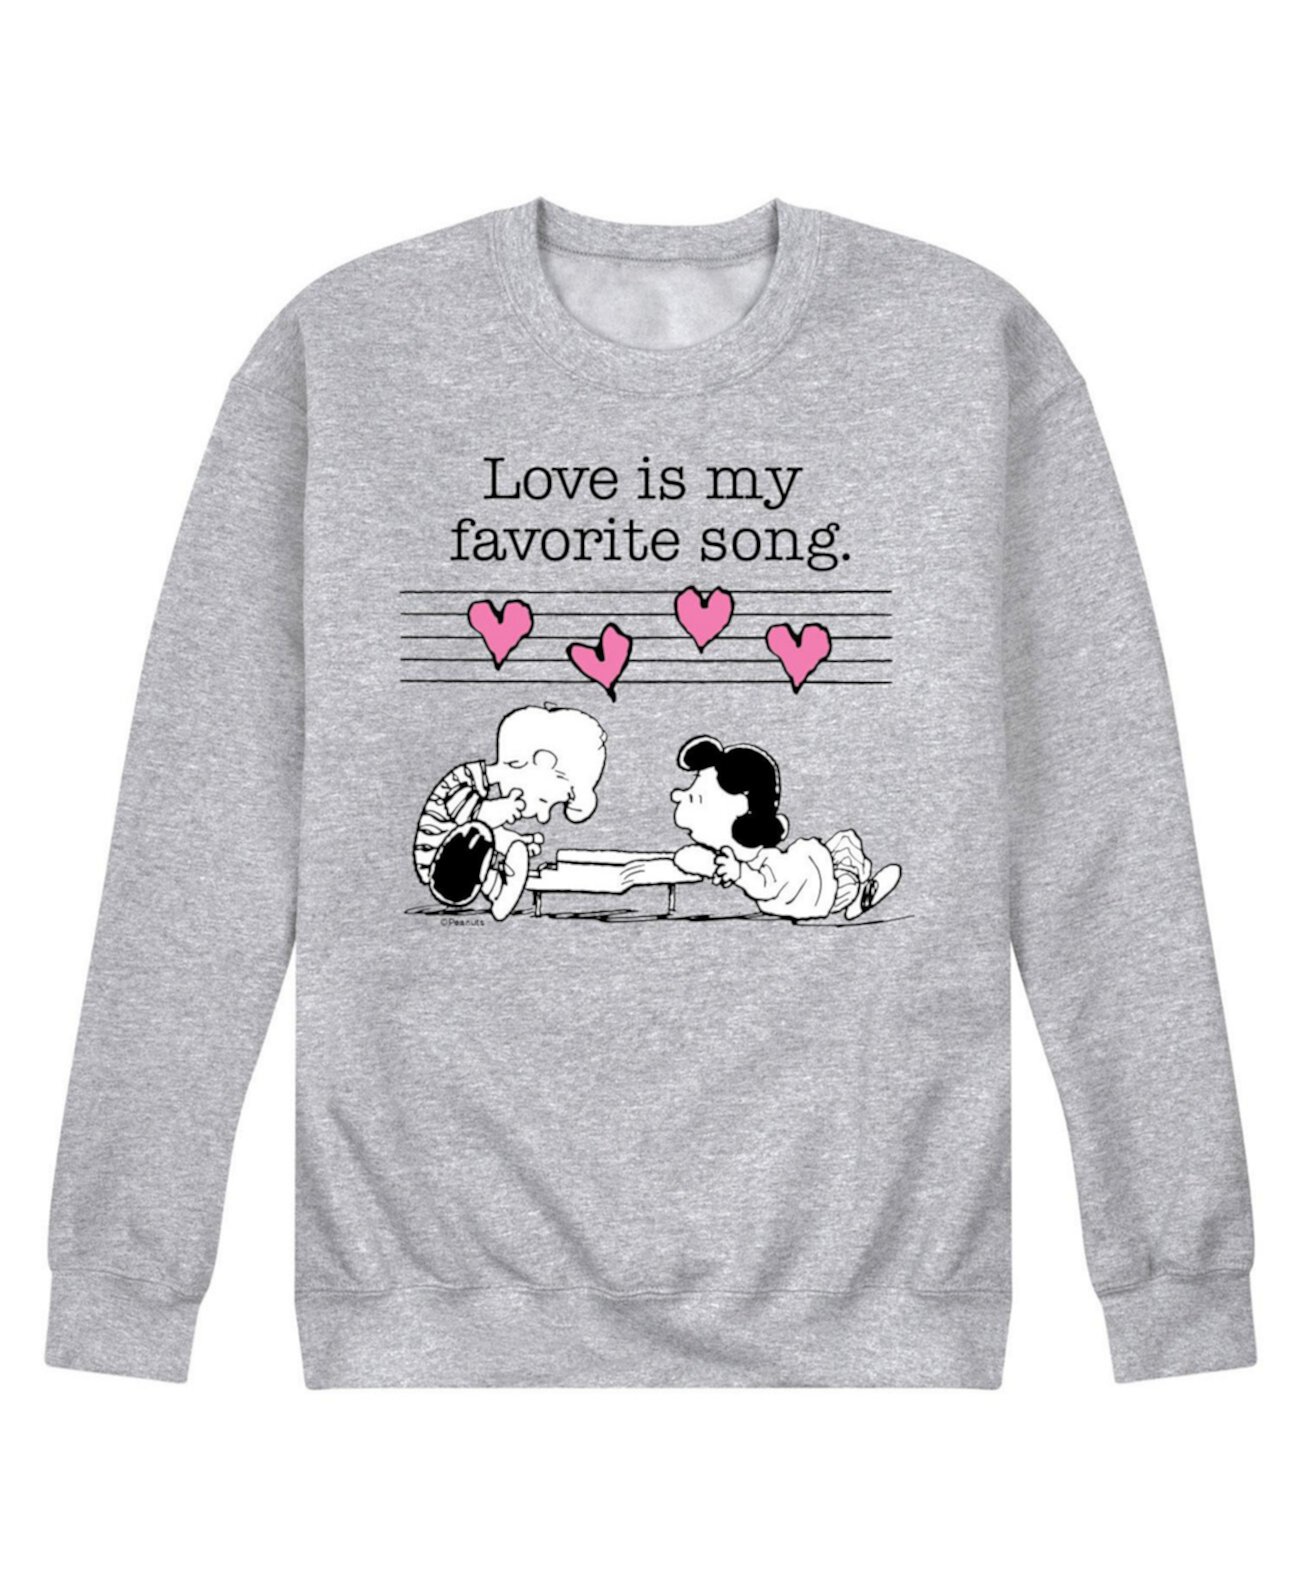 Мужская флисовая толстовка Peanuts Love is Favorite Song AIRWAVES